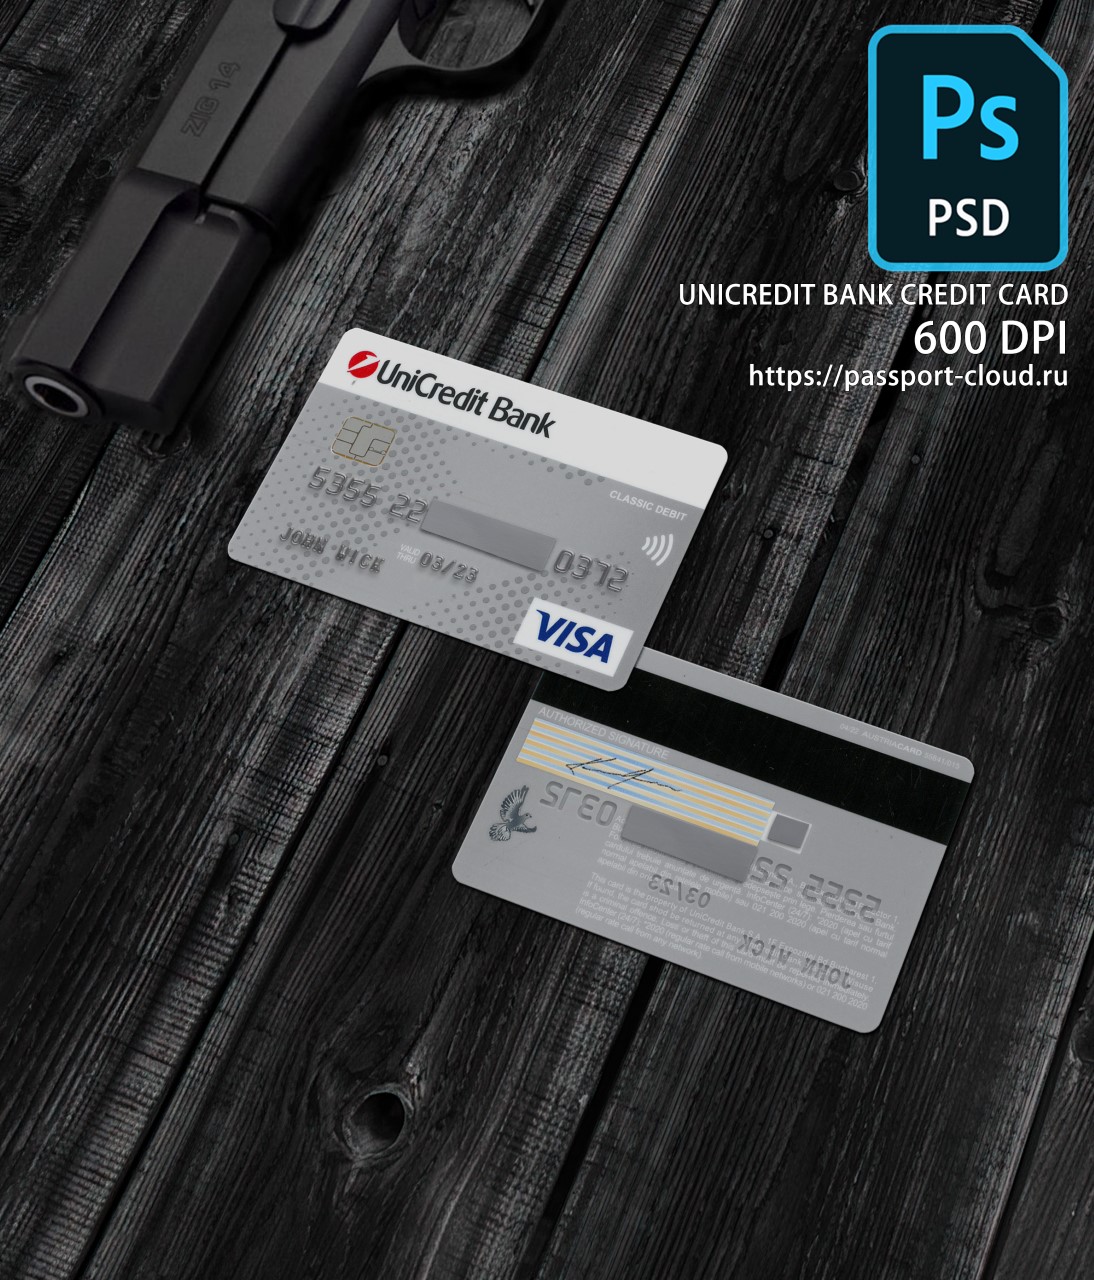 UniCredit Bank Credit Card PSD-0